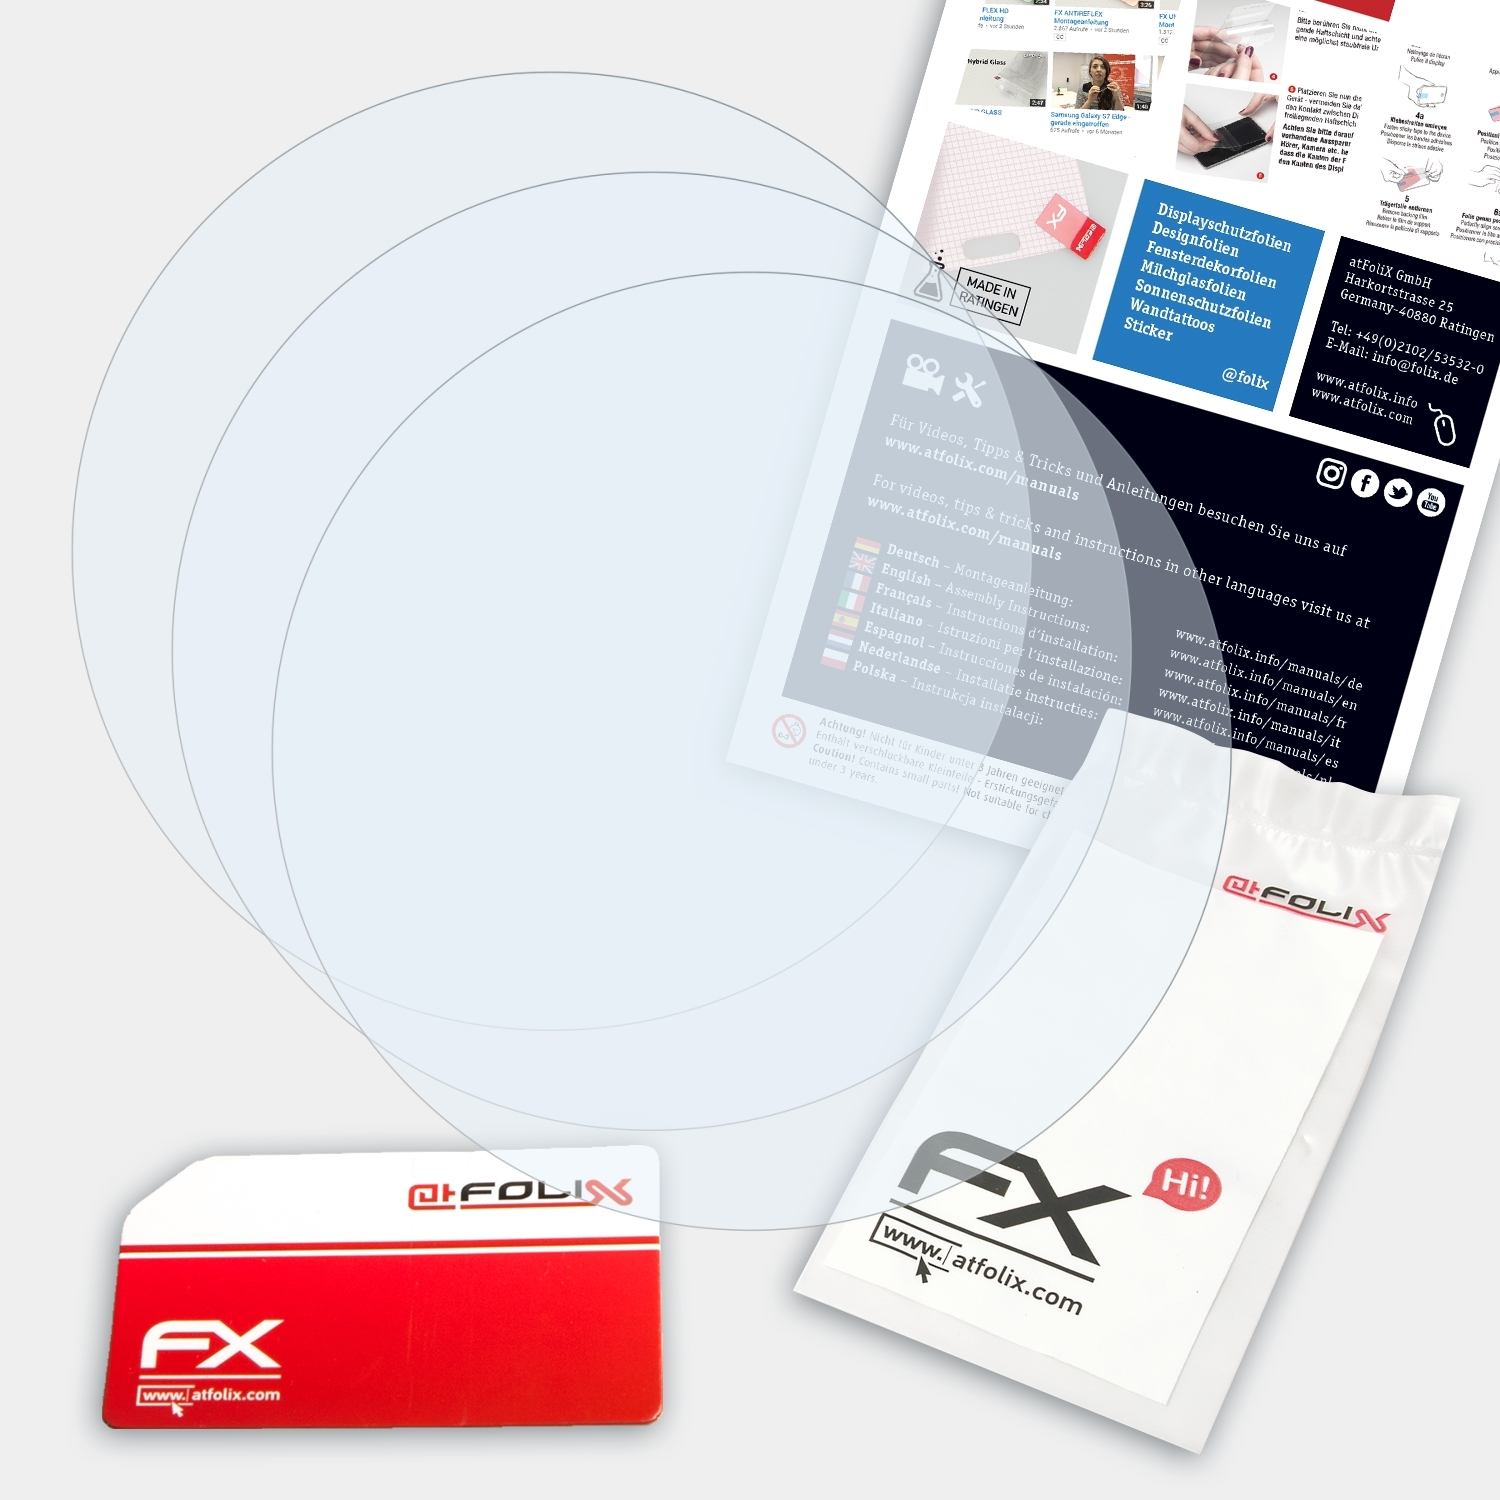 ATFOLIX 3x FX-Clear Displayschutz(für Lemfo LemZ)